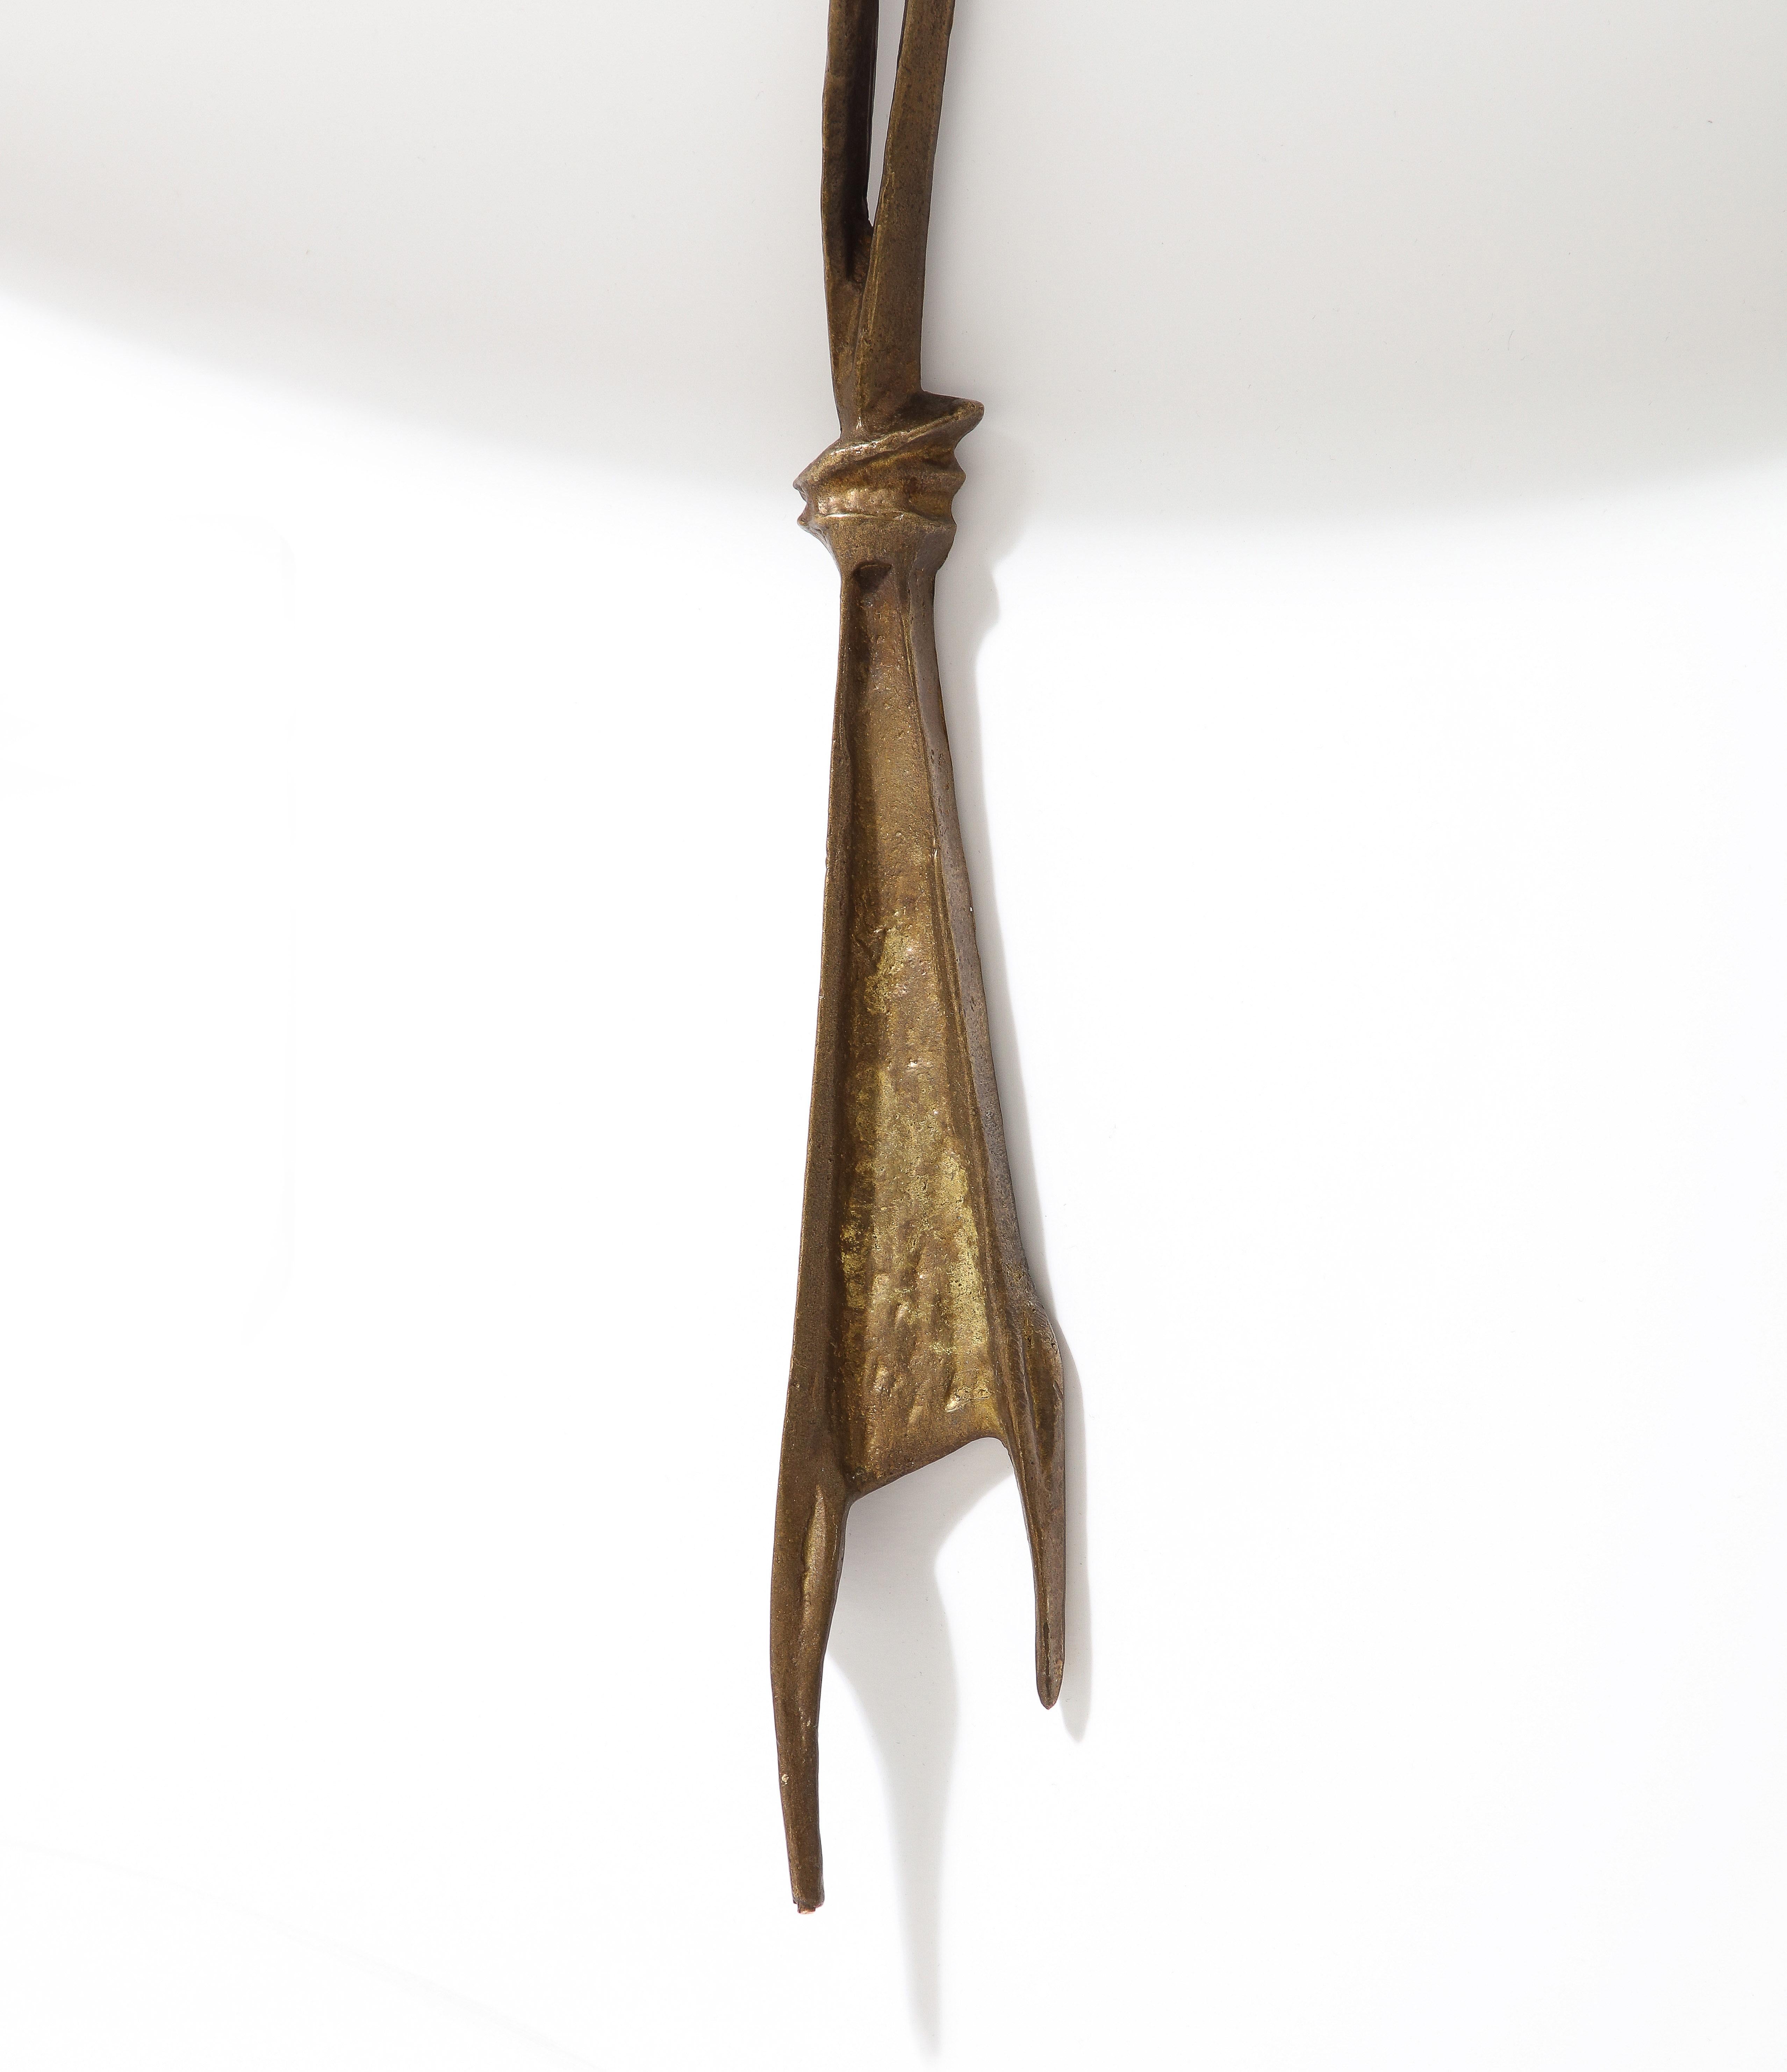  Felix Agostini “Amour Ardent” Bronze Sconces, France 1960's For Sale 7